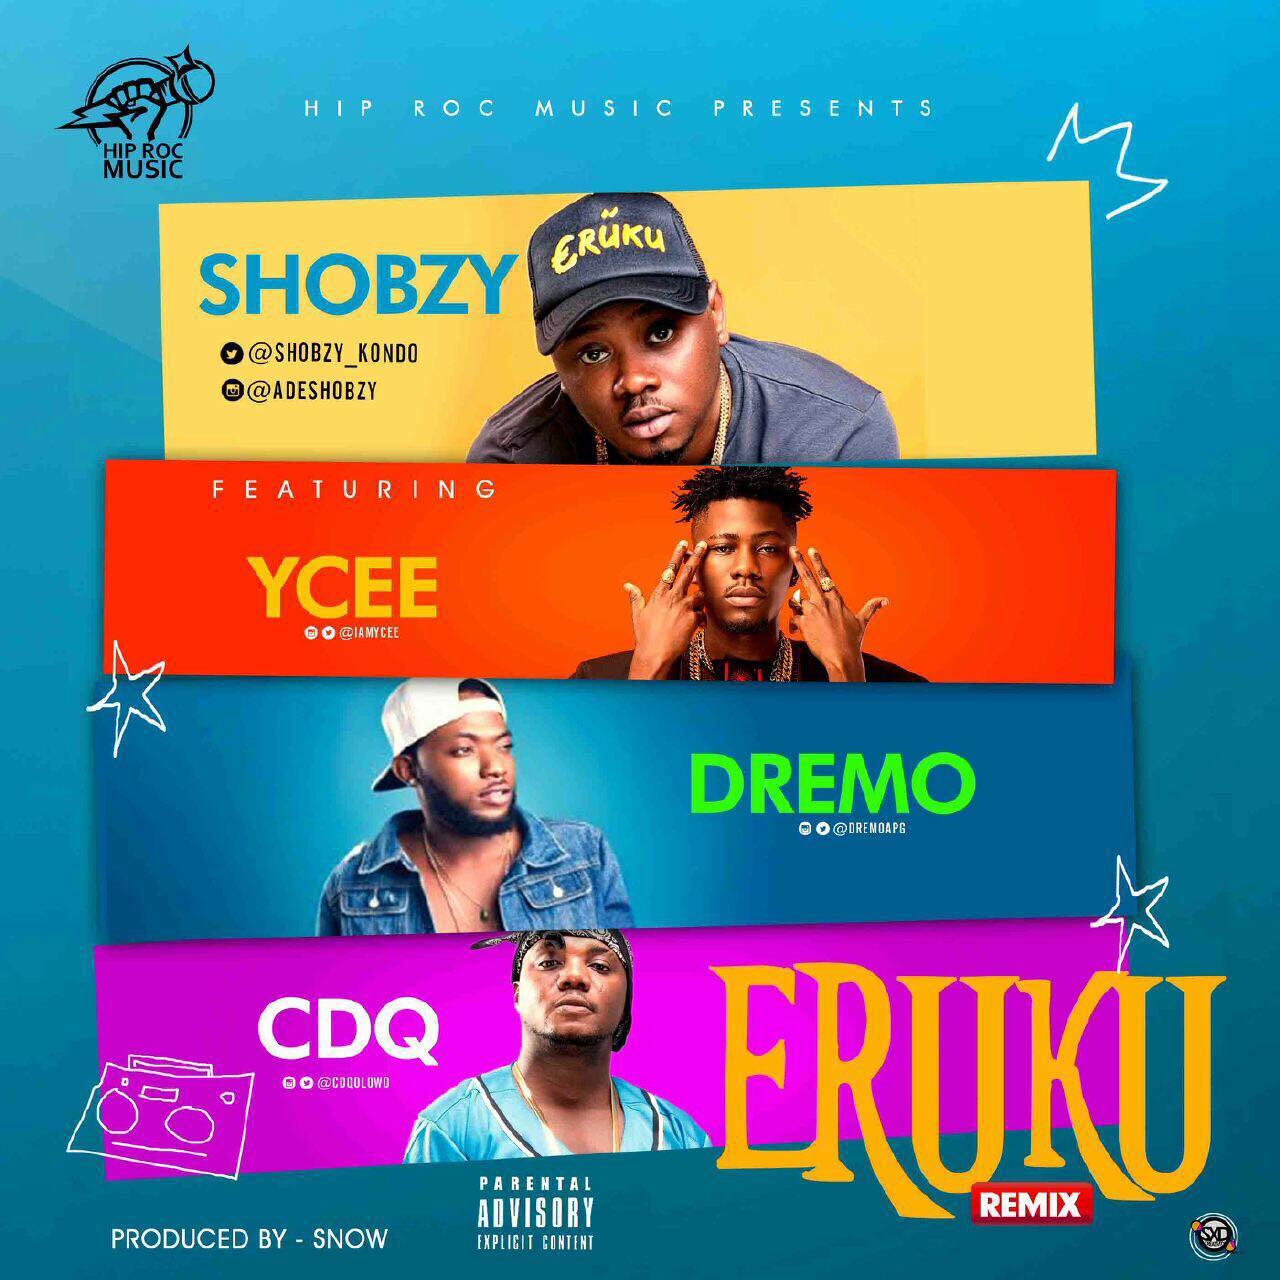 Shobzy ft. Ycee, CDQ & Dremo - Eruku (Remix)